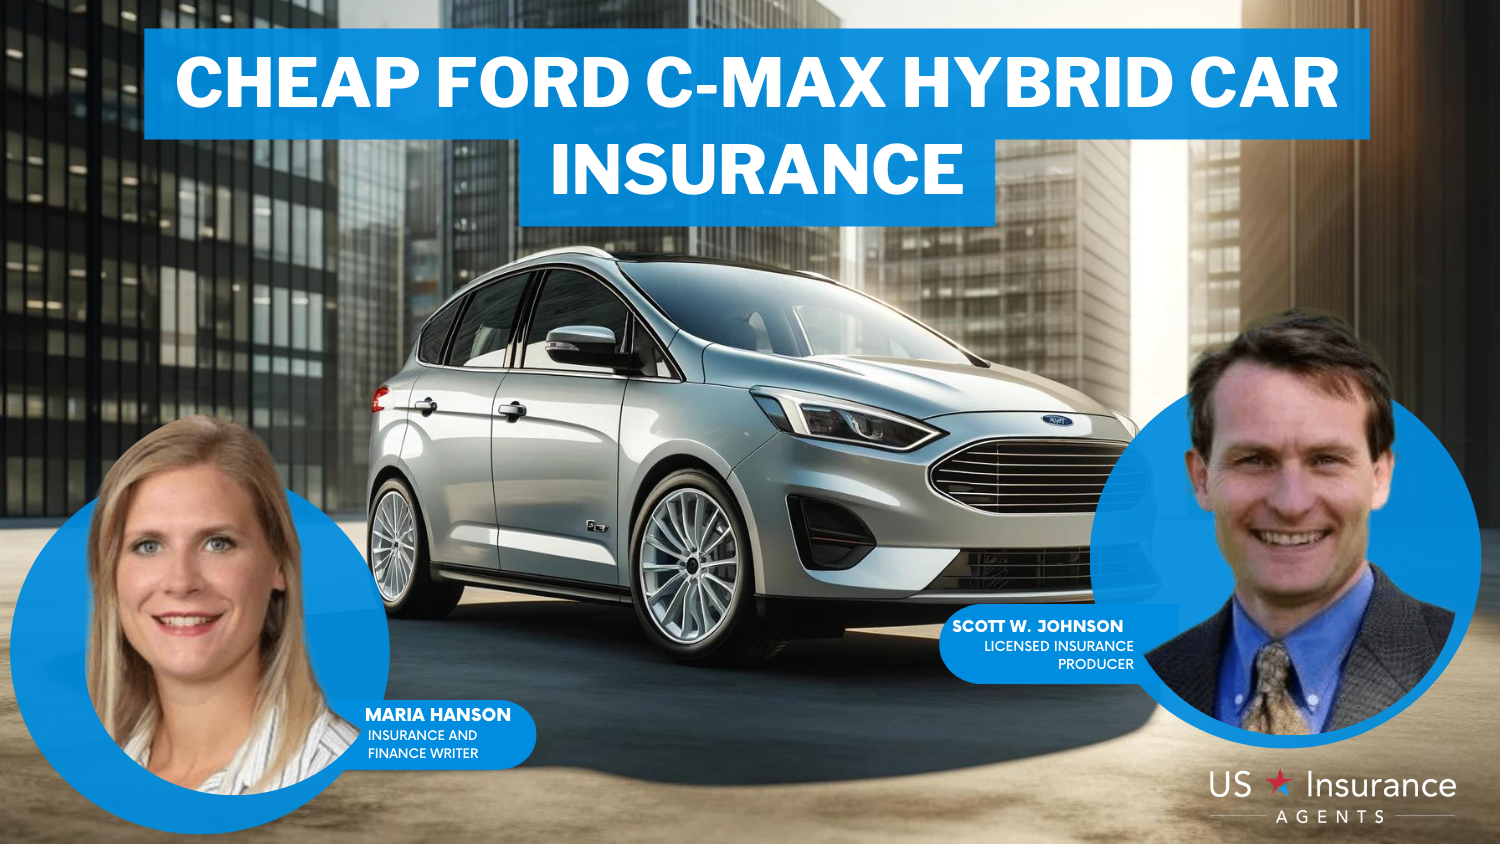 Cheap Ford C-Max Hybrid Car Insurance: Progressive, State Farm, and Nationwide